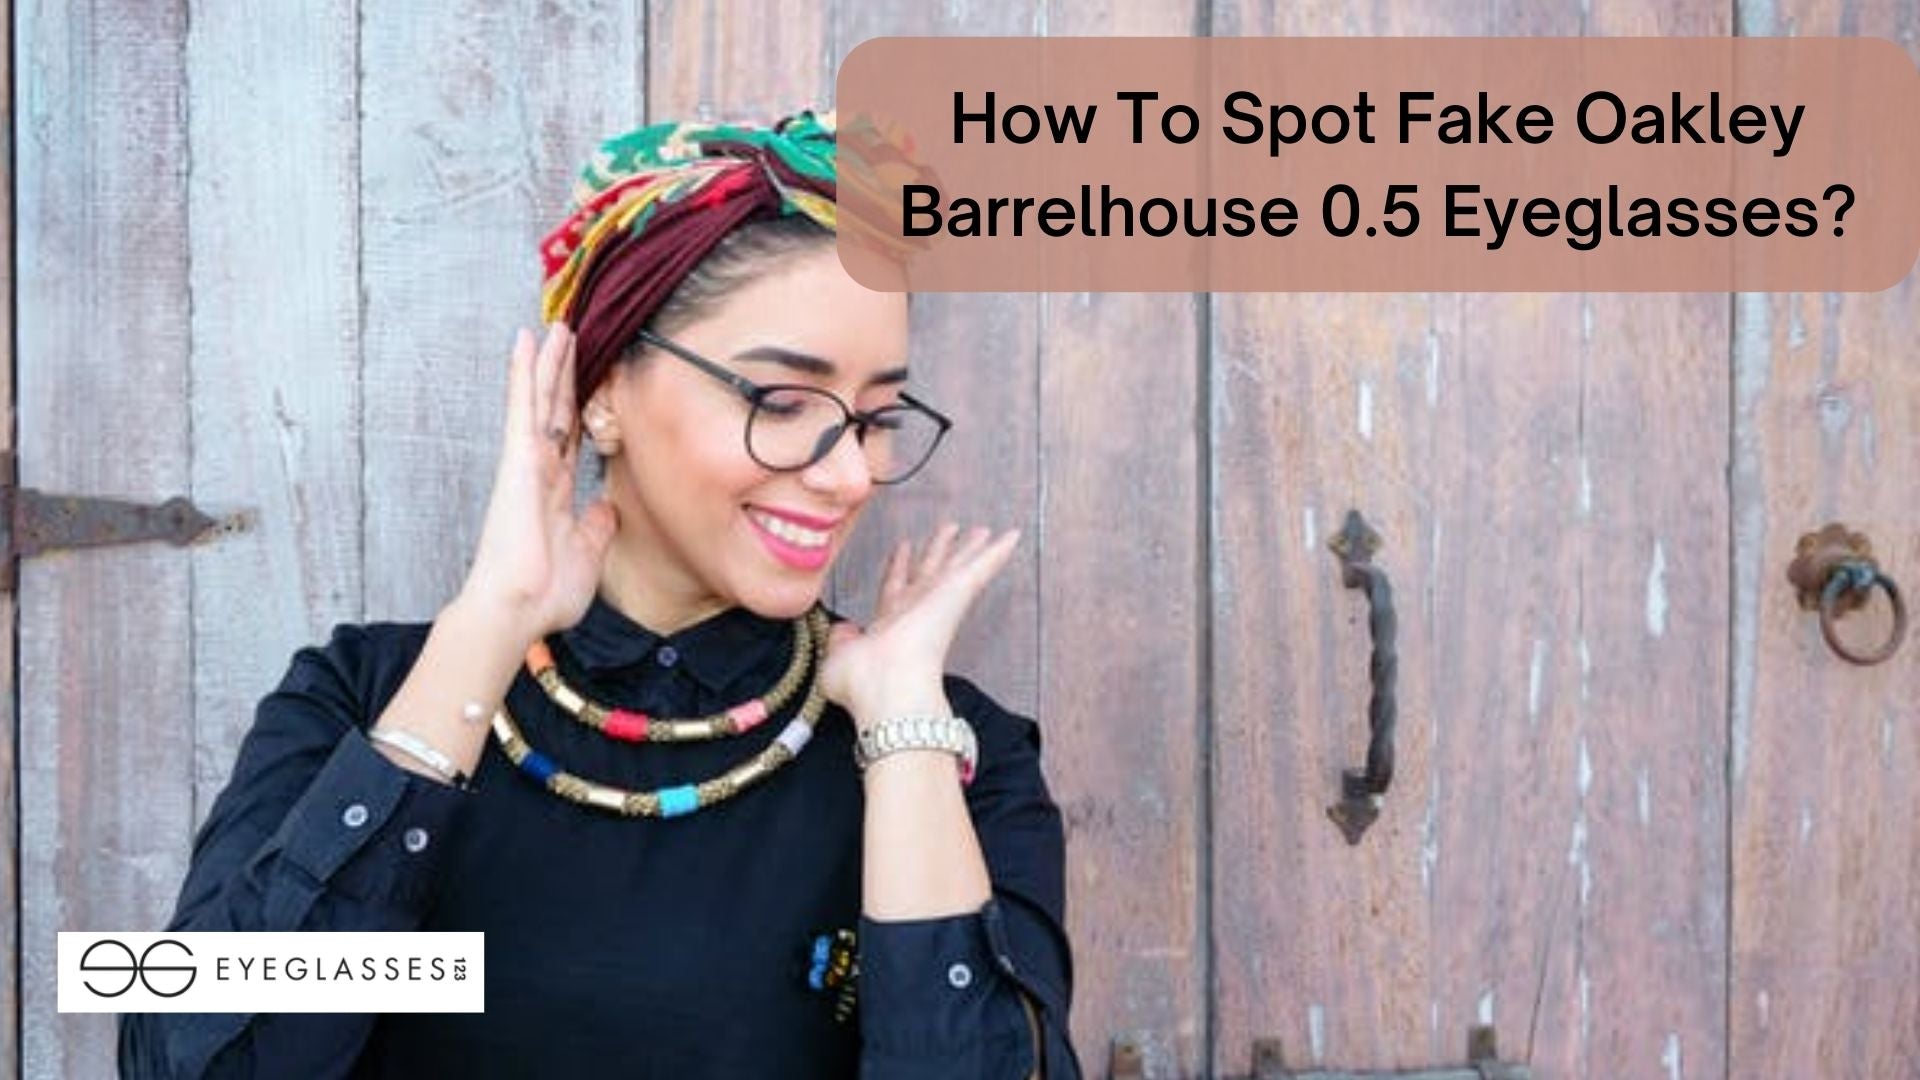 How To Spot Fake Oakley Barrelhouse 0.5 Eyeglasses?